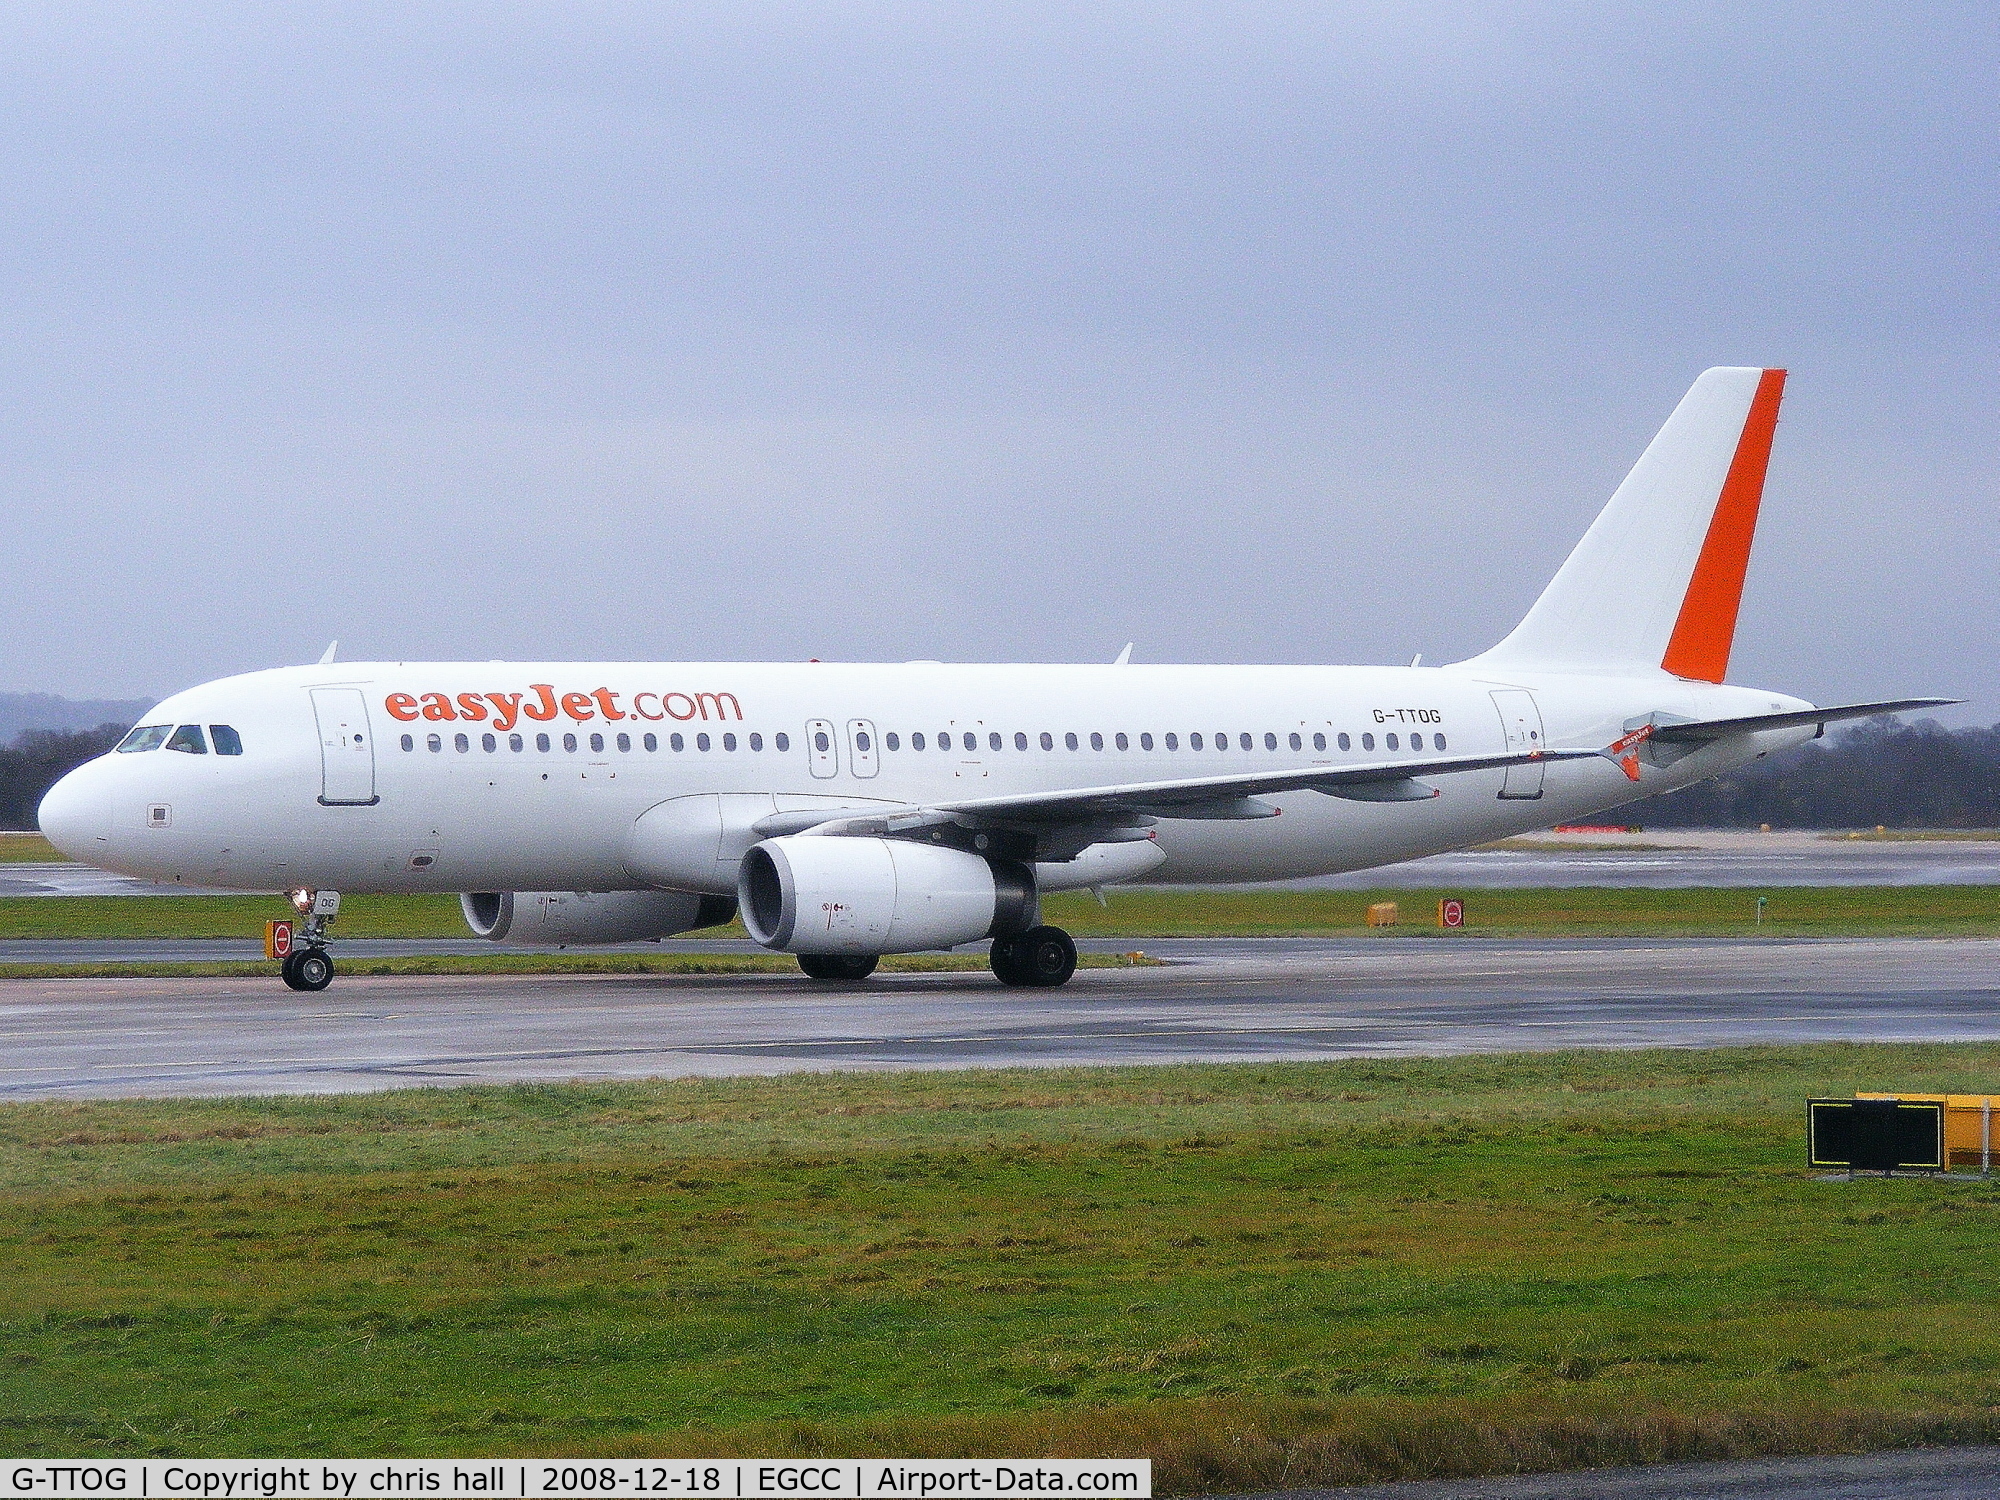 G-TTOG, 2003 Airbus A320-232 C/N 1969, Easyjet